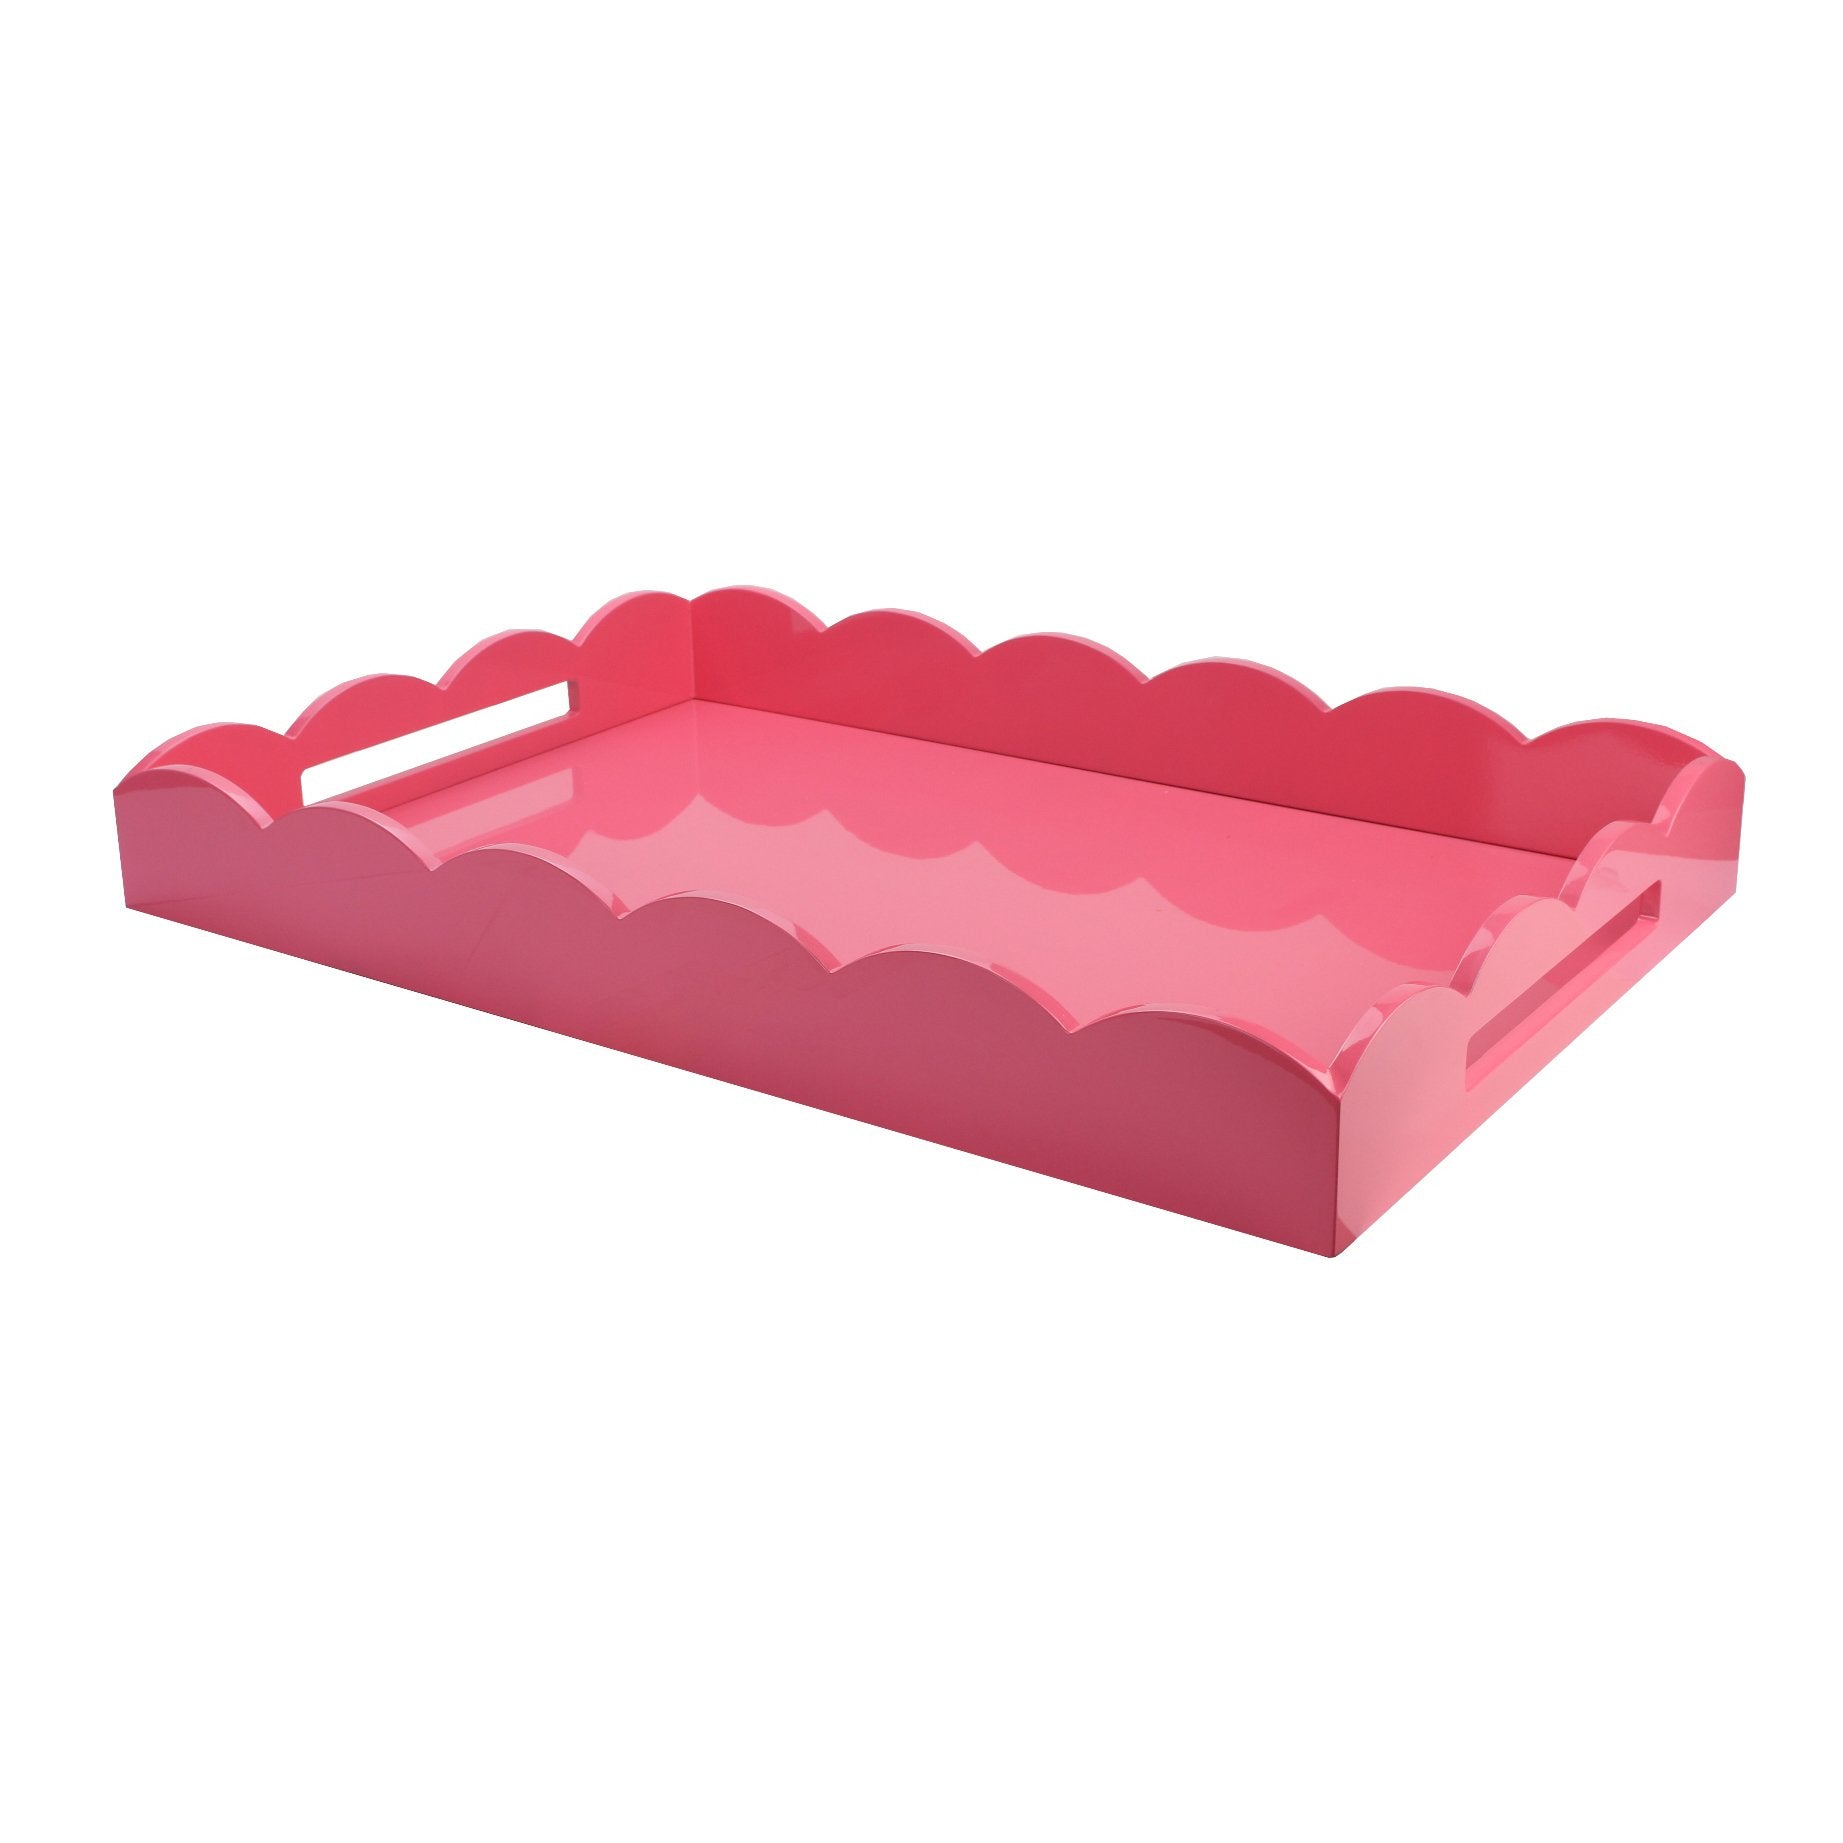 26x17 Scalloped Tray Pink